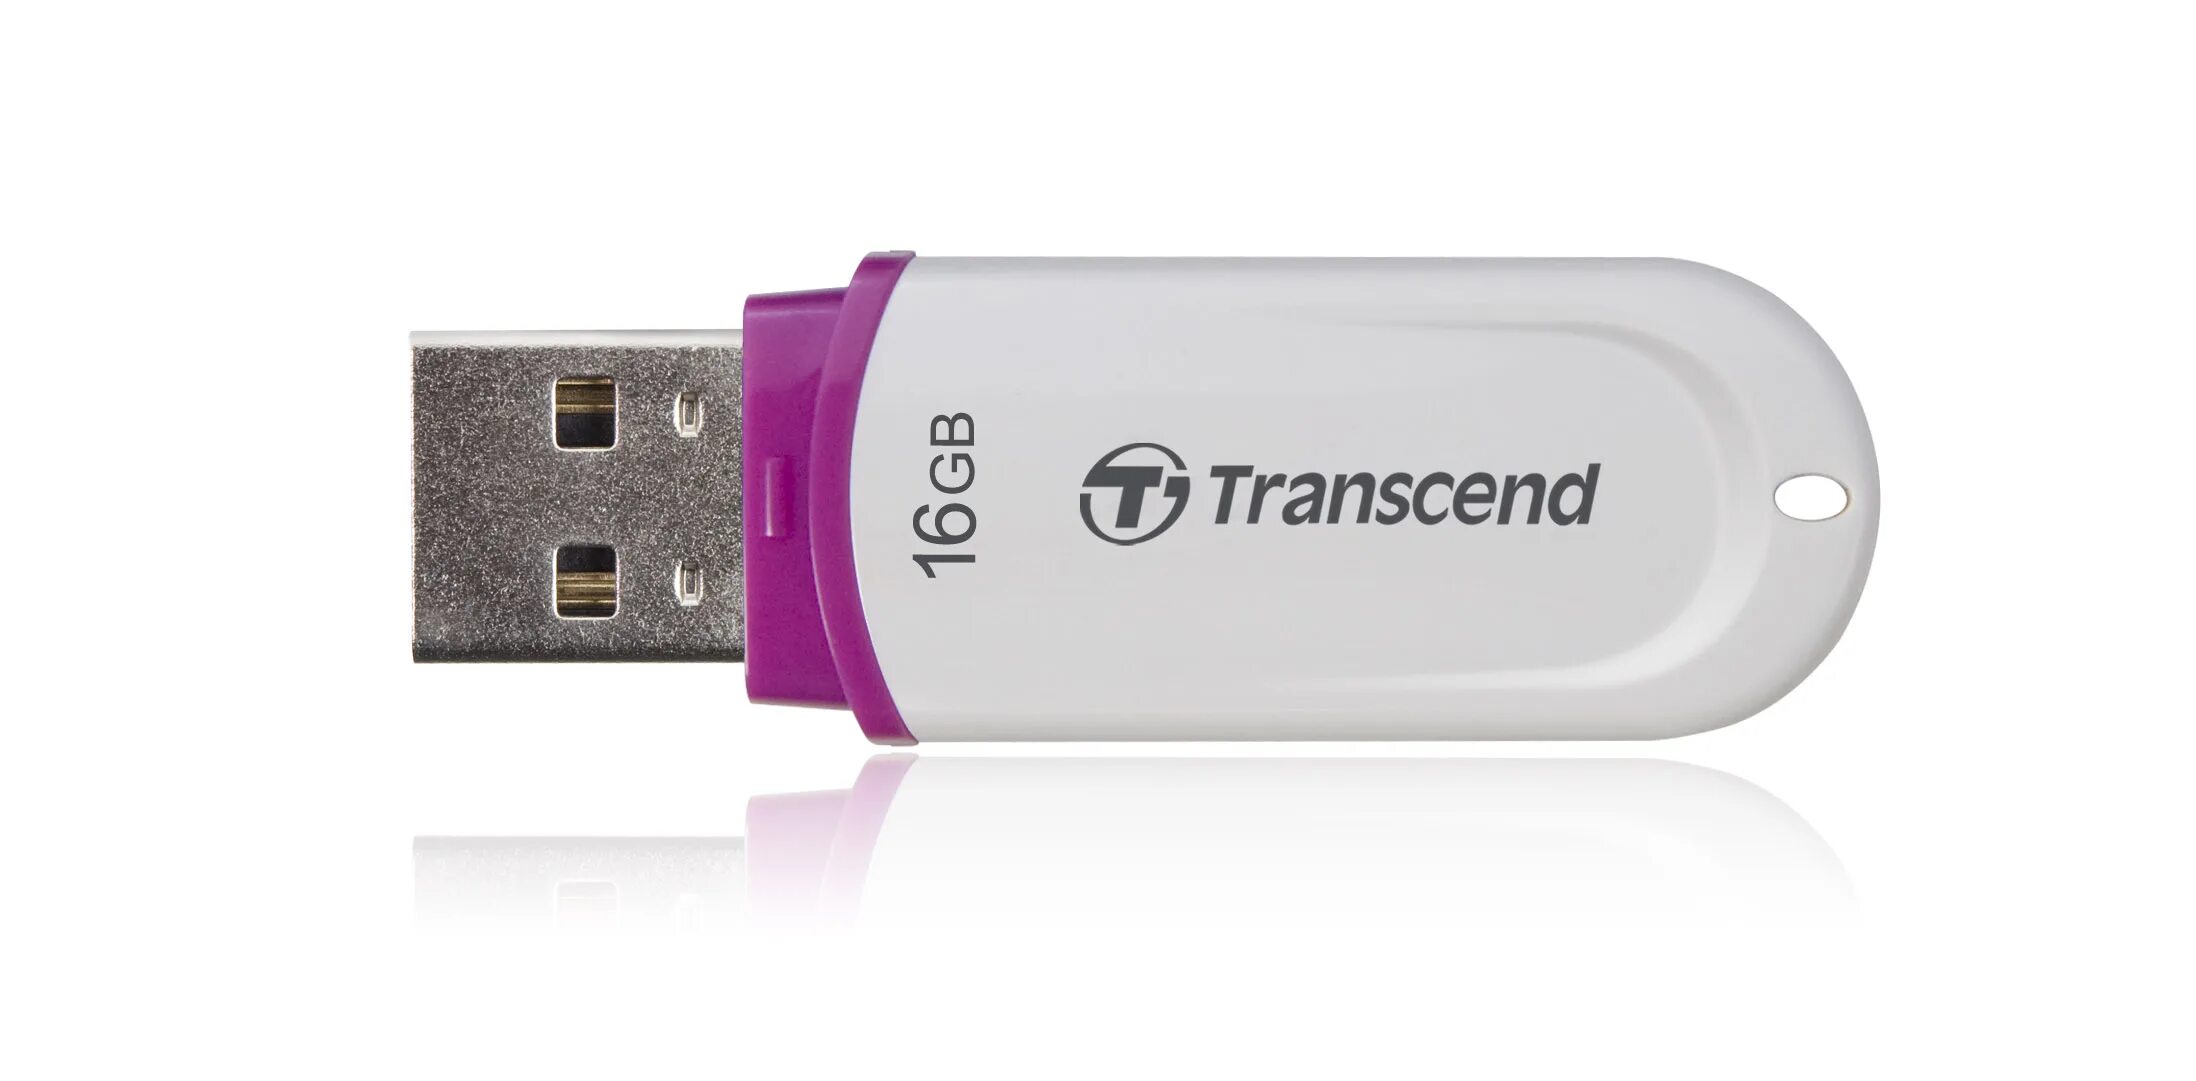 Сайт гб 8. Флешка Transcend 8 GB. Transcend JETFLASH 330 8gb. USB Stick 16 GB Transcend. Transcend JETFLASH 16gb USB 2.0.